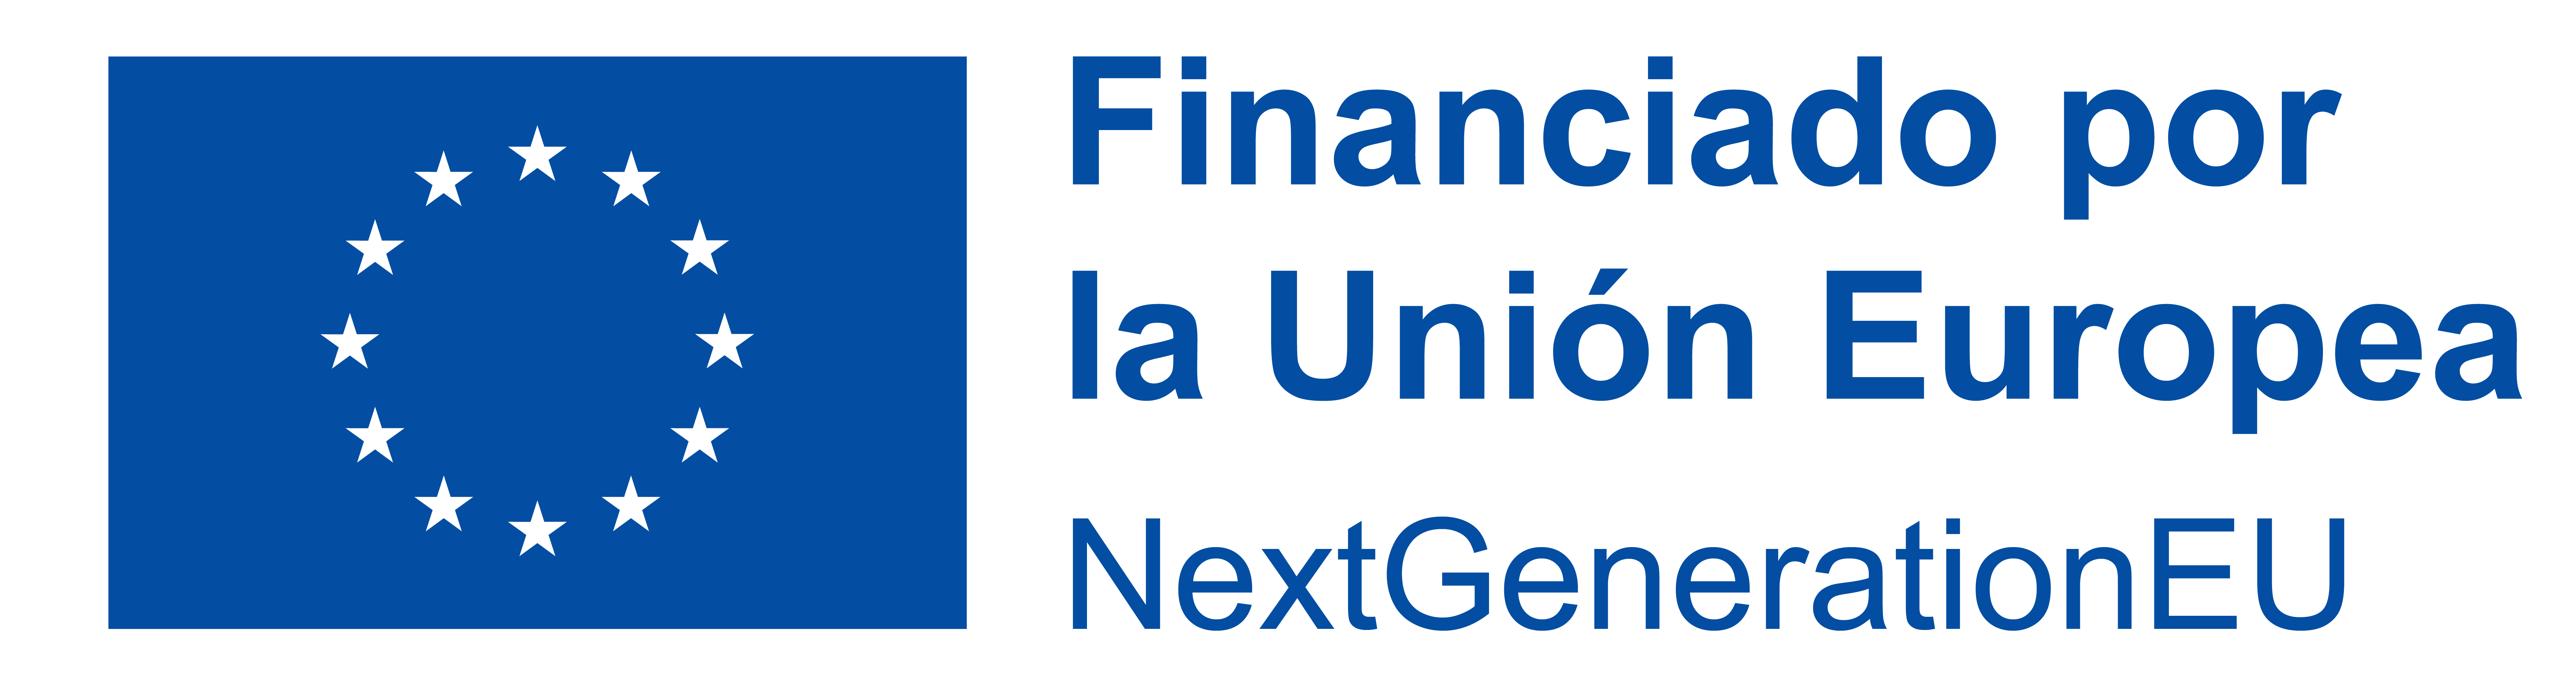 Logo ES-Financiado-por-la-Union-Europea_PANTONE